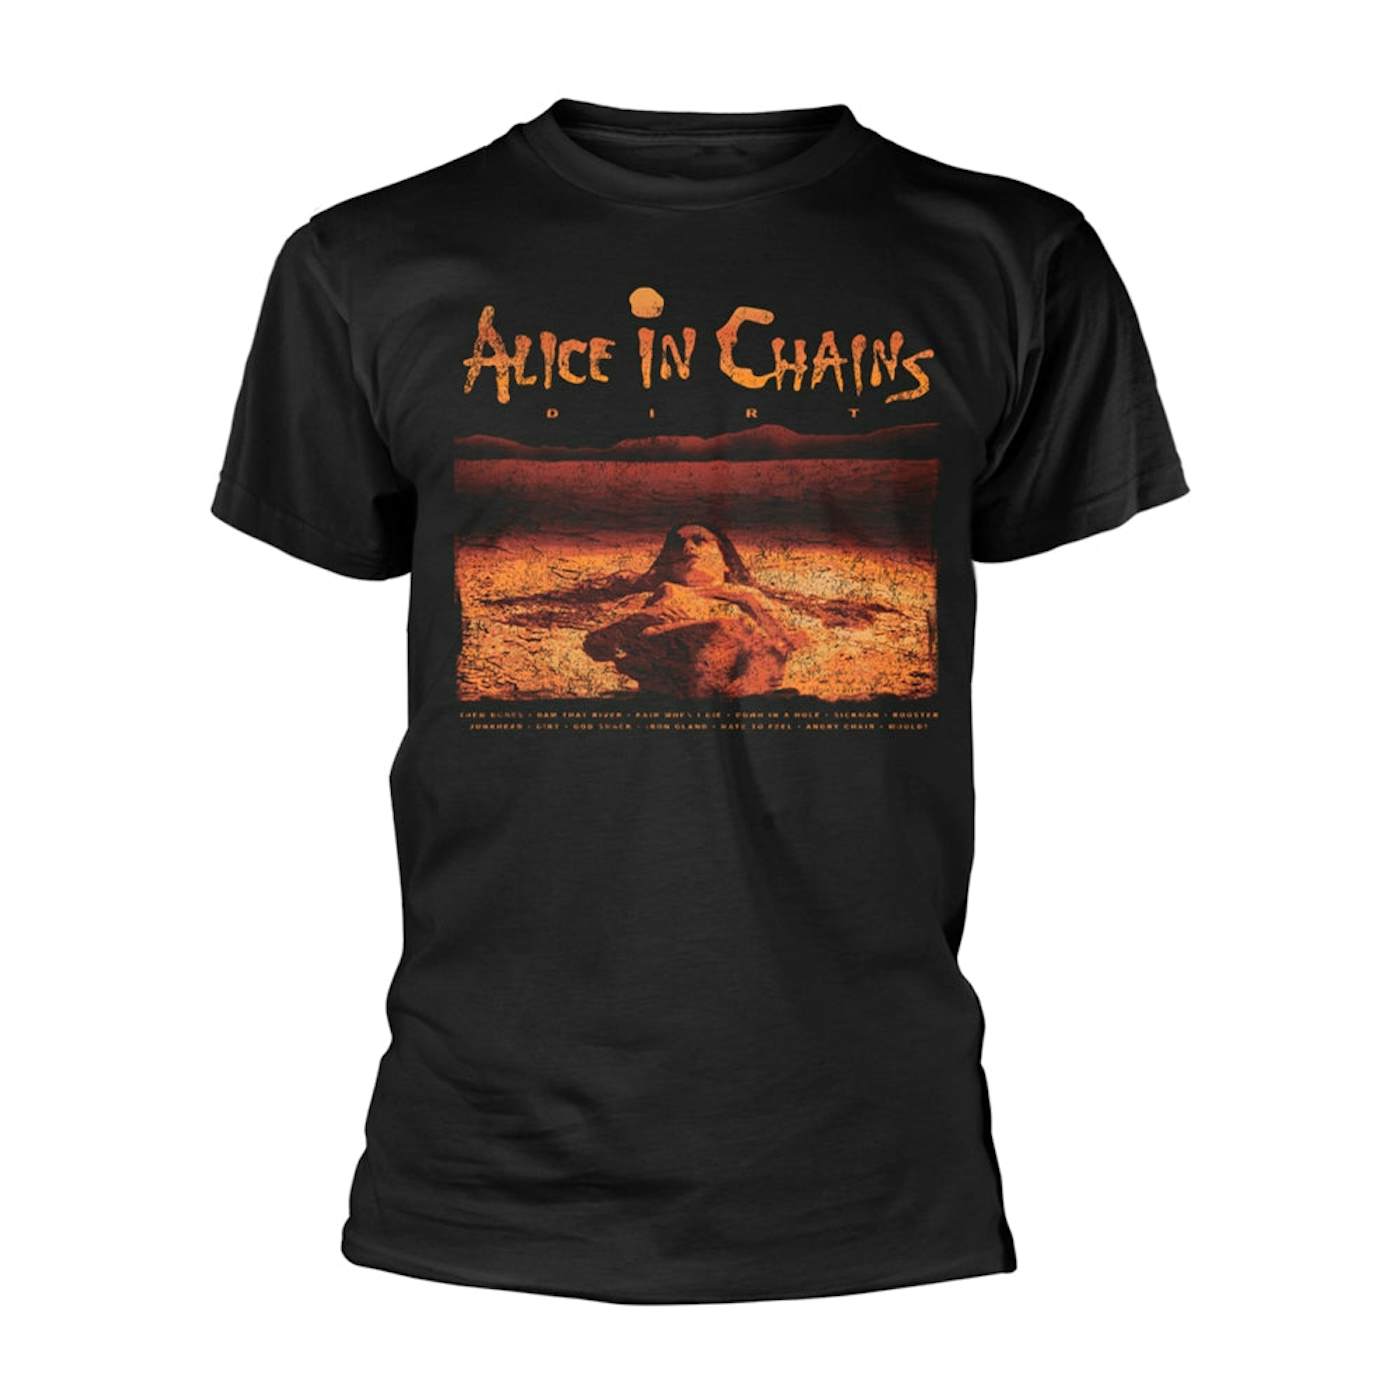 Alice In Chains T Shirt - Dirt Tracklist